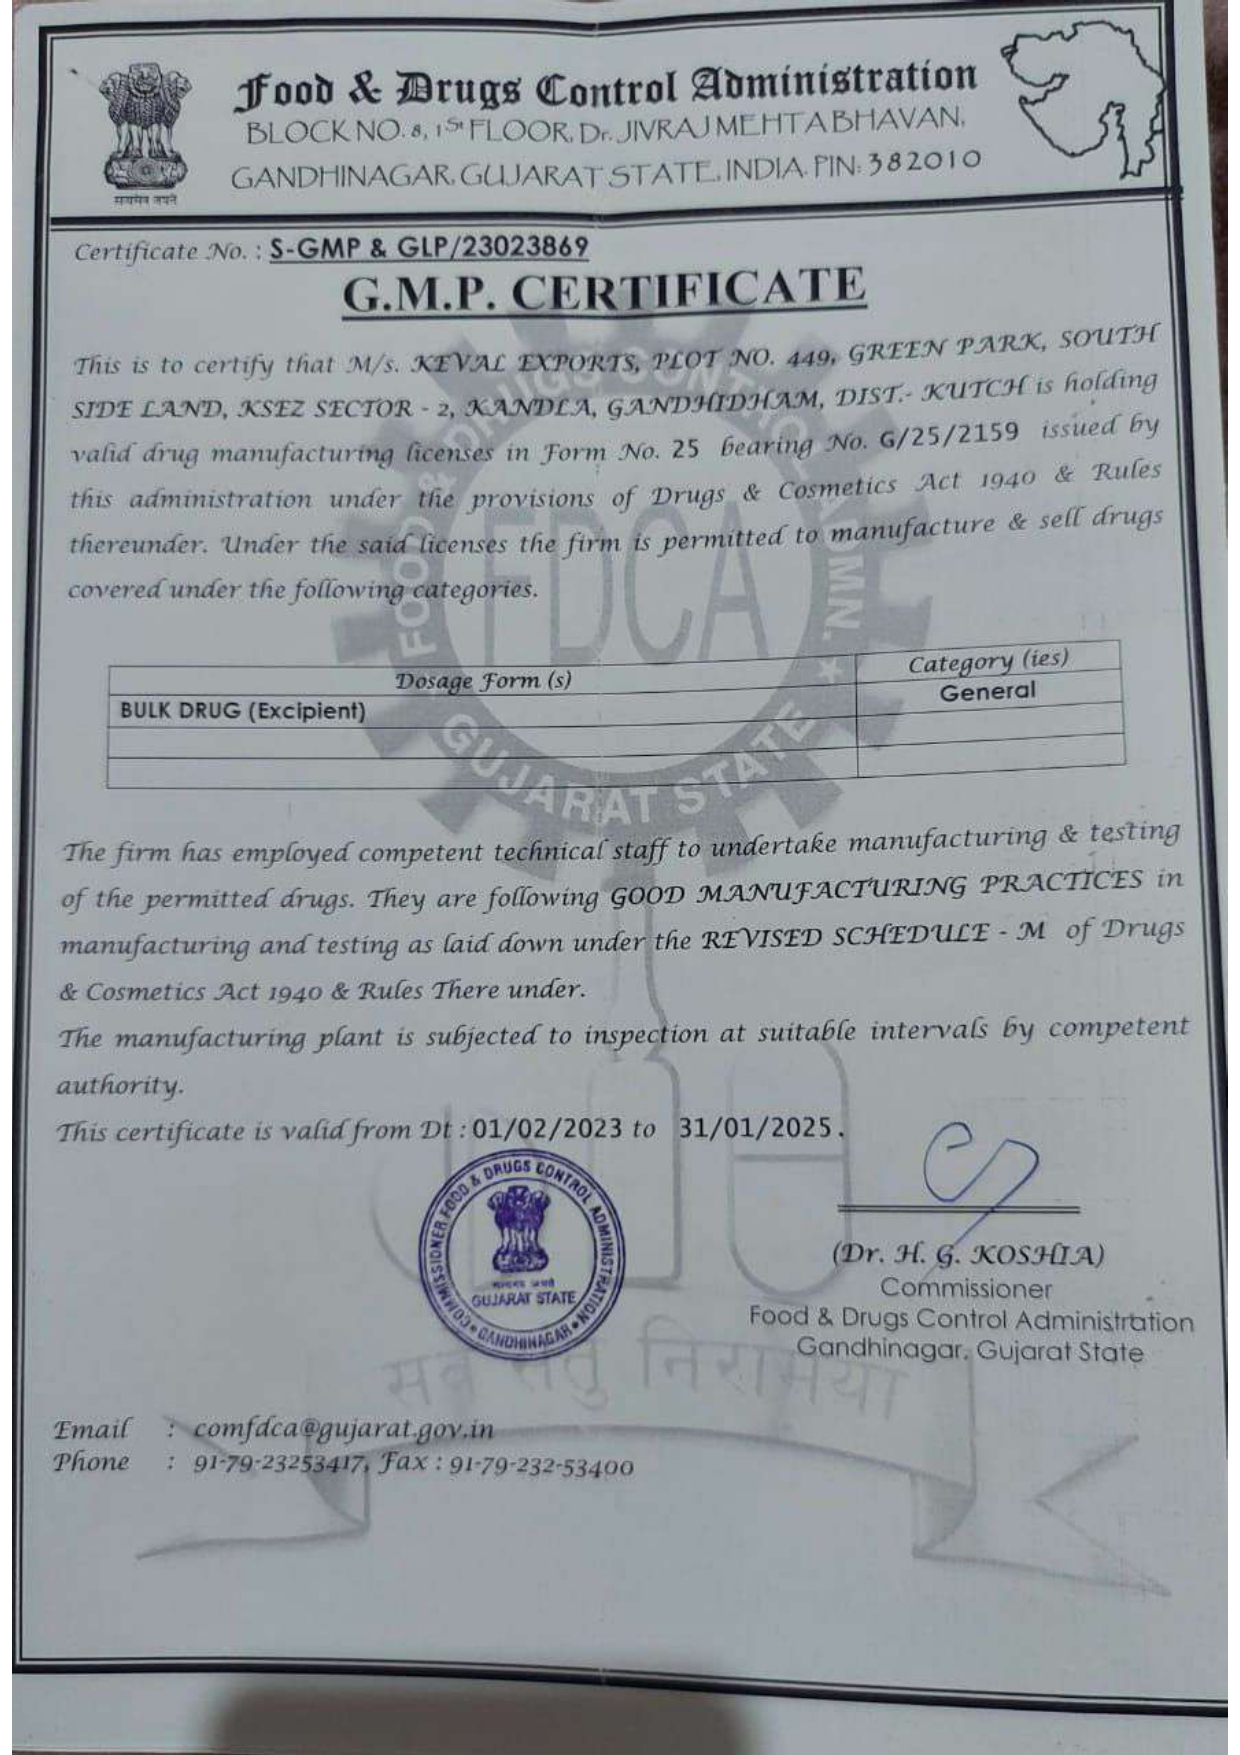 GMP Certificate - Foods & Drug Control Administration